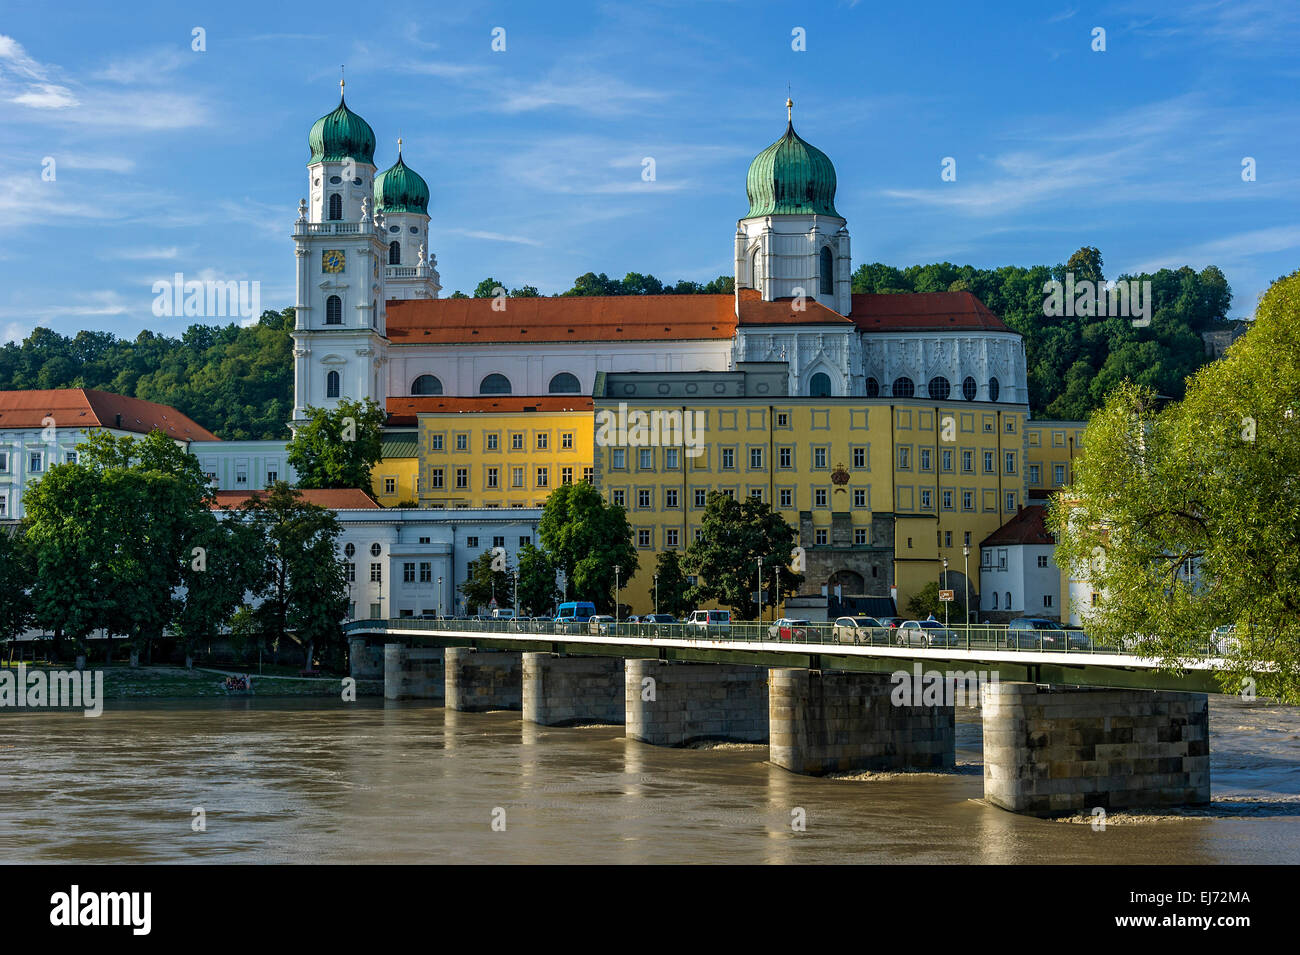 Baroque-style St. Stephen's Cathedral, Inn river, Marienbrücke bridge, historic centre, Passau, Lower Bavaria, Bavaria, Germany Stock Photo